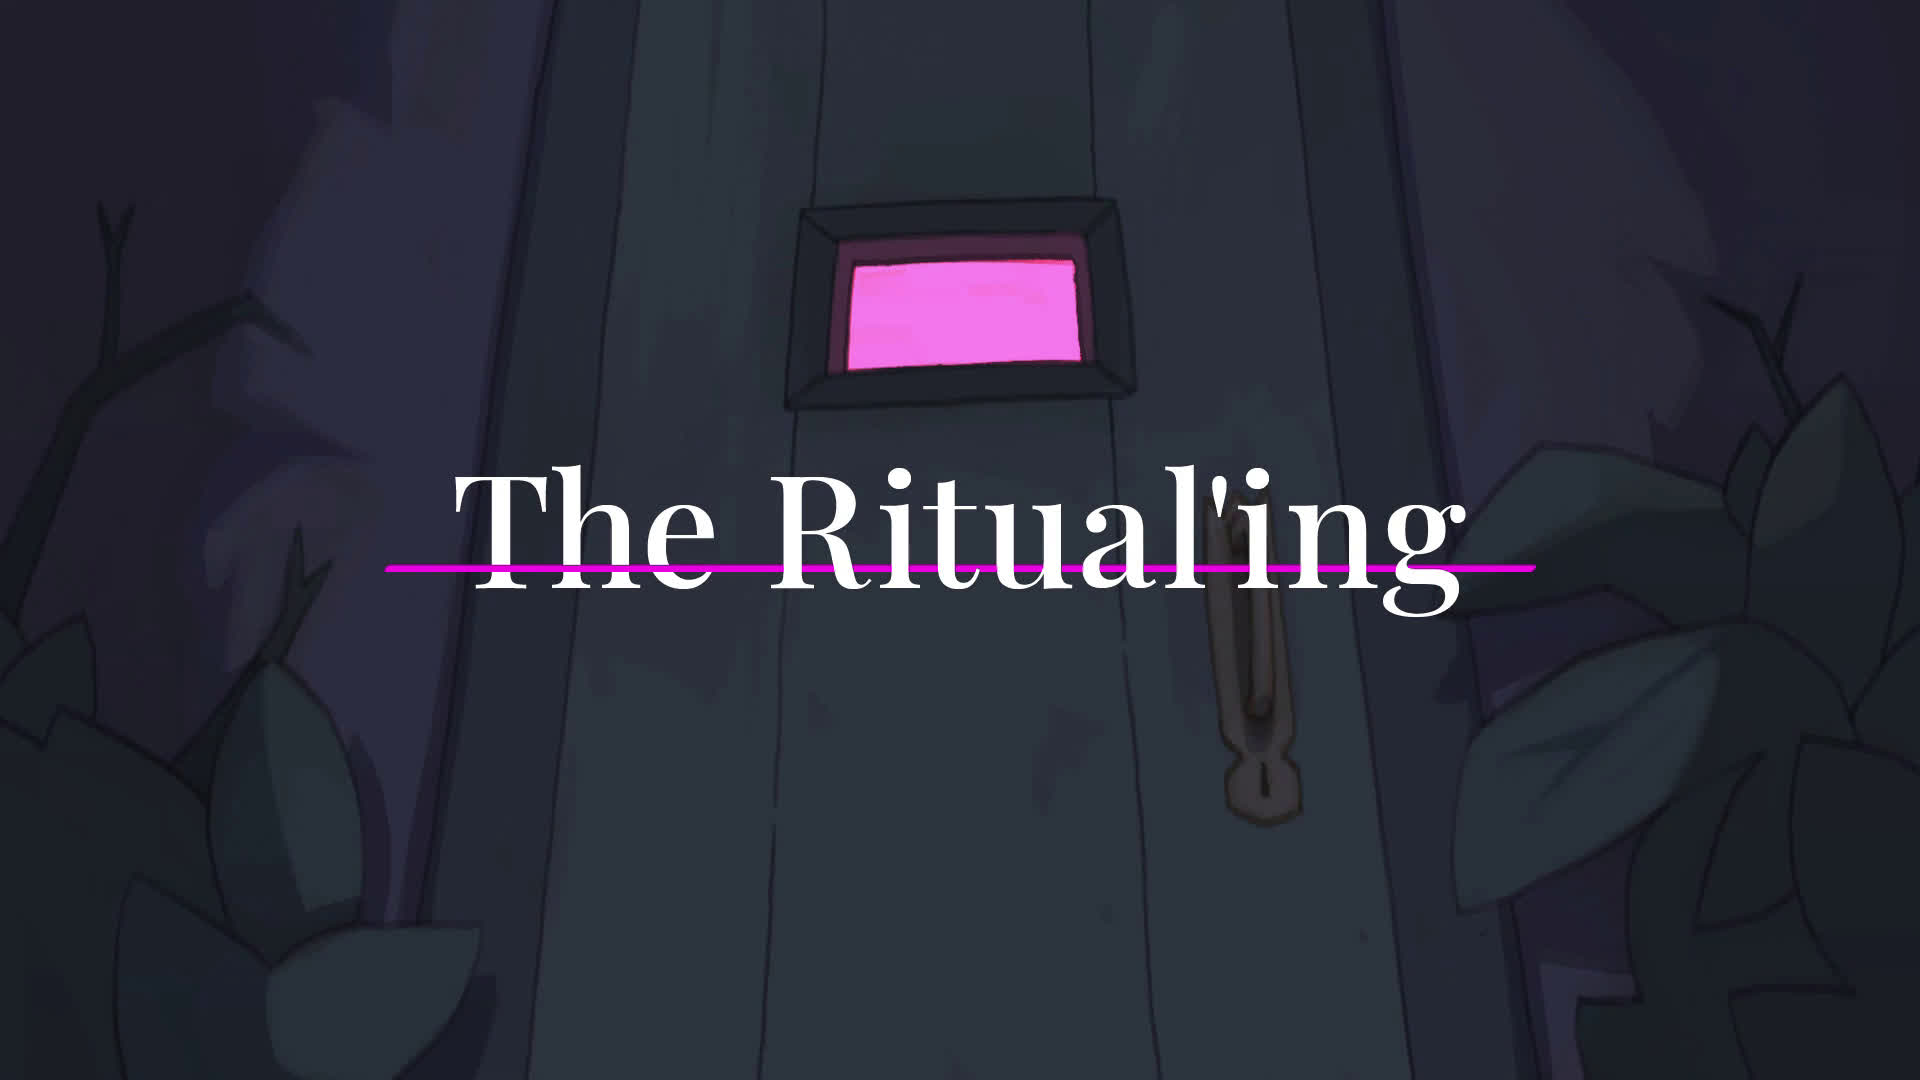 The ritualing